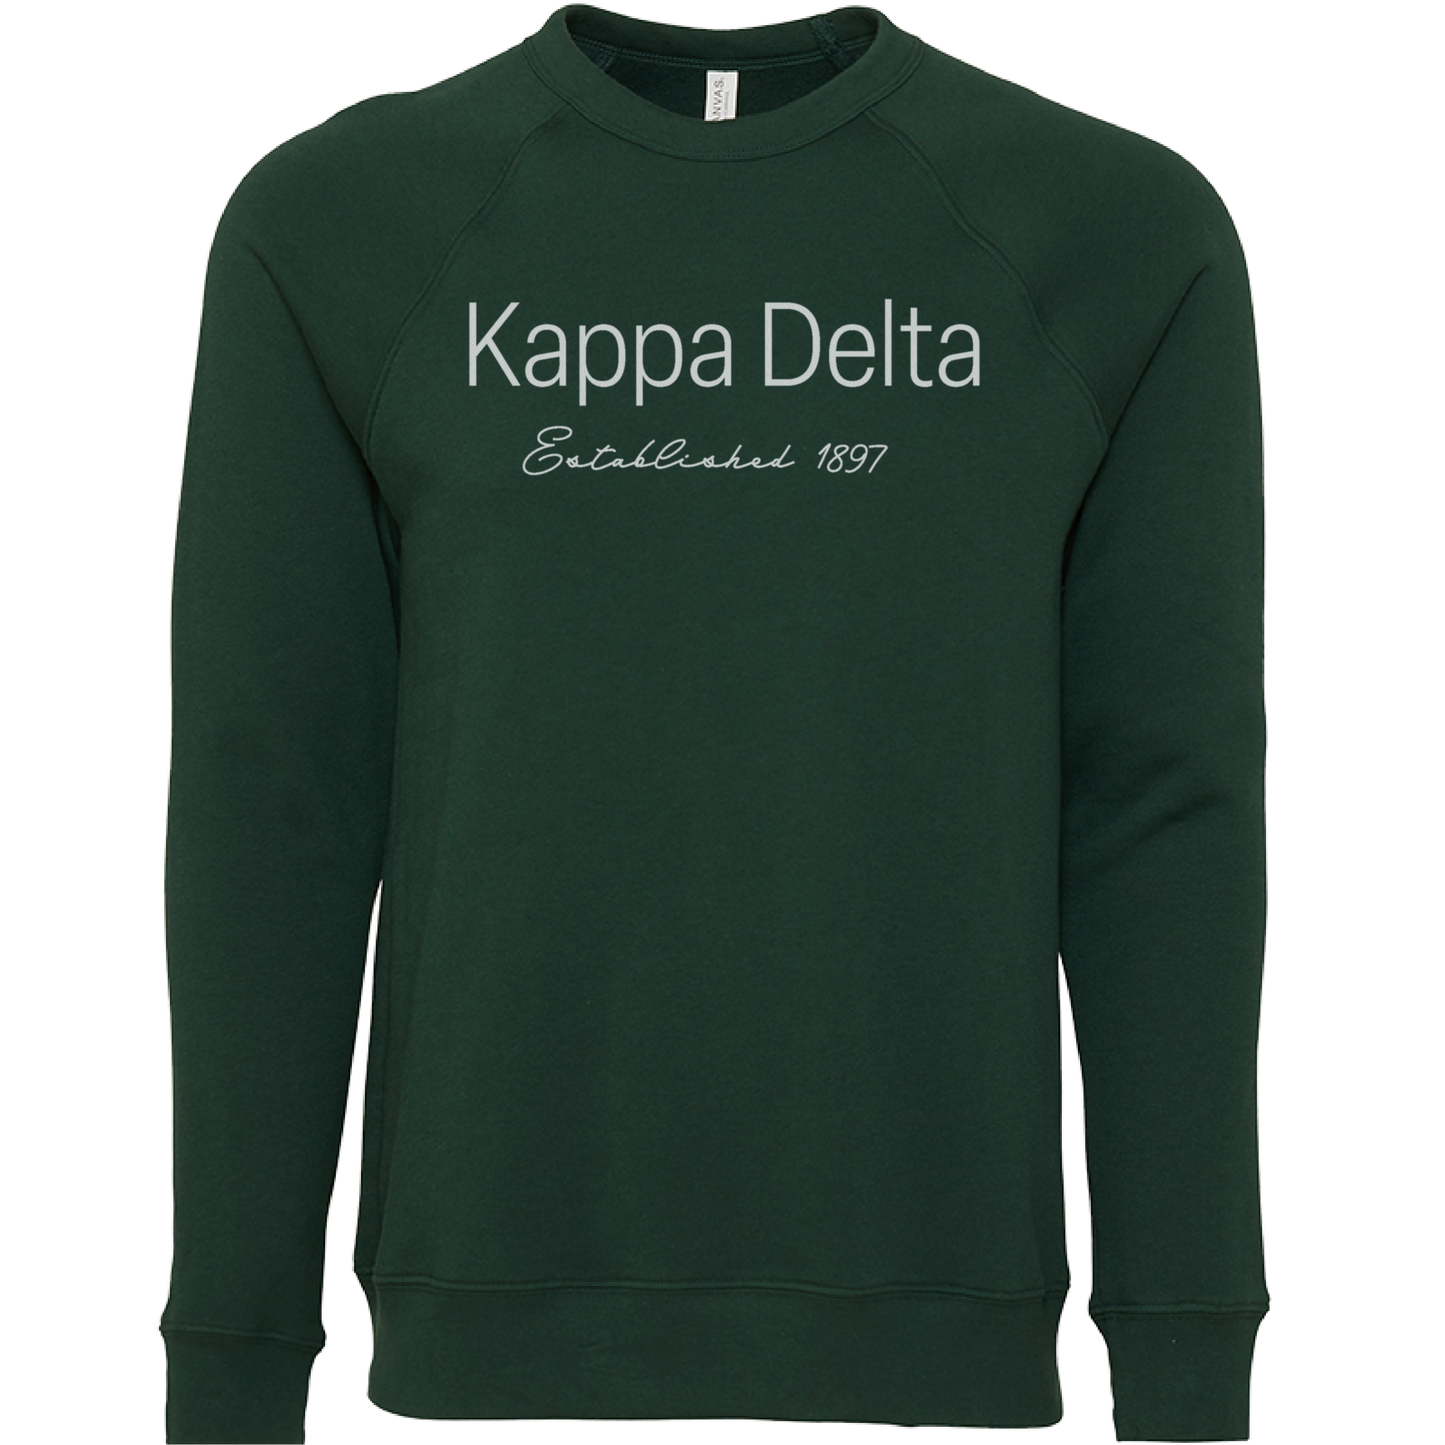 Kappa Delta Embroidered Printed Name Crewneck Sweatshirts